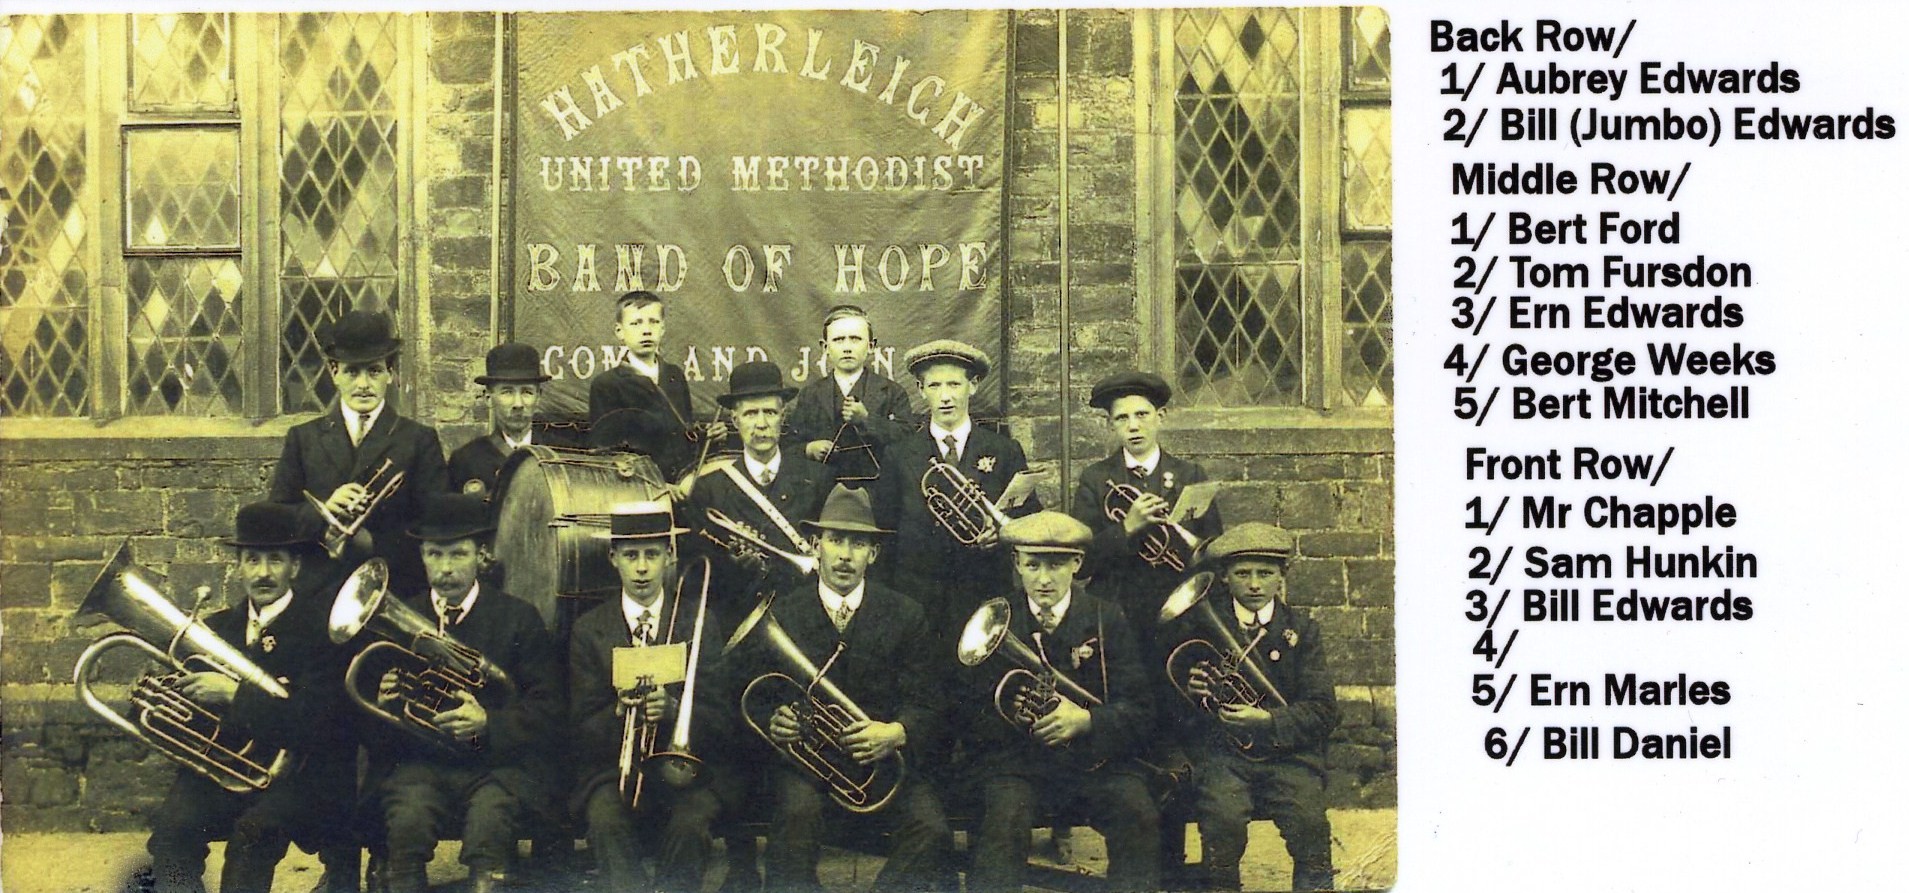 Hatherleigh United Methodist Band of Hope